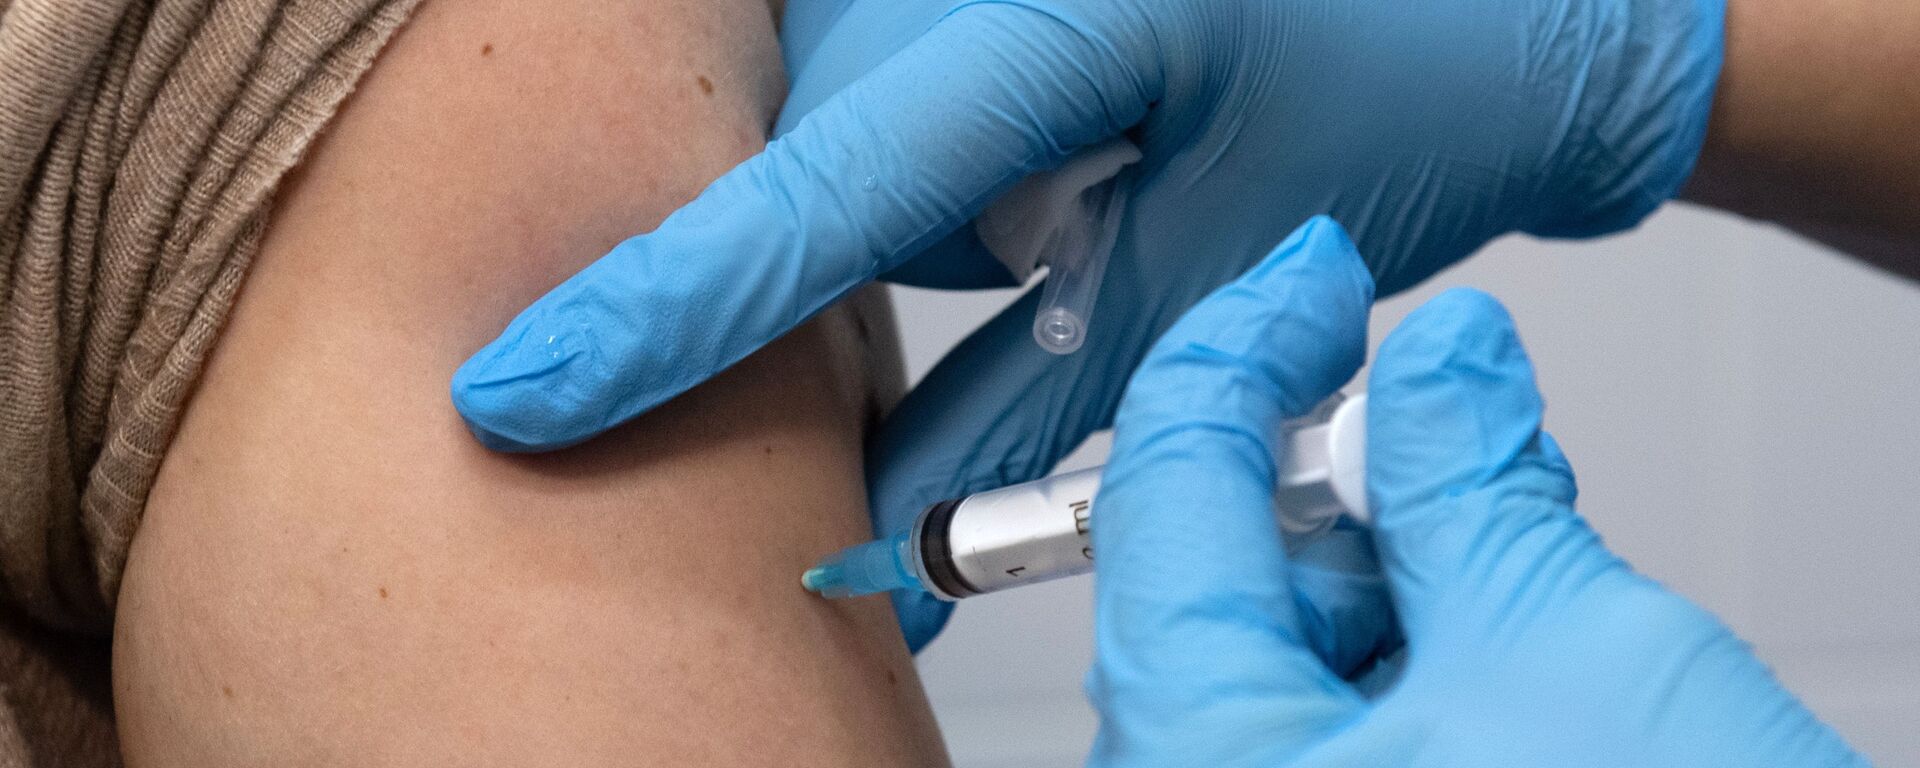 تطعيم أهالي موسكو بلقاح ضد فيروس كورونا (كوفيد - 19)، روسيا 5 ديسمبر 2020 - سبوتنيك عربي, 1920, 06.07.2021